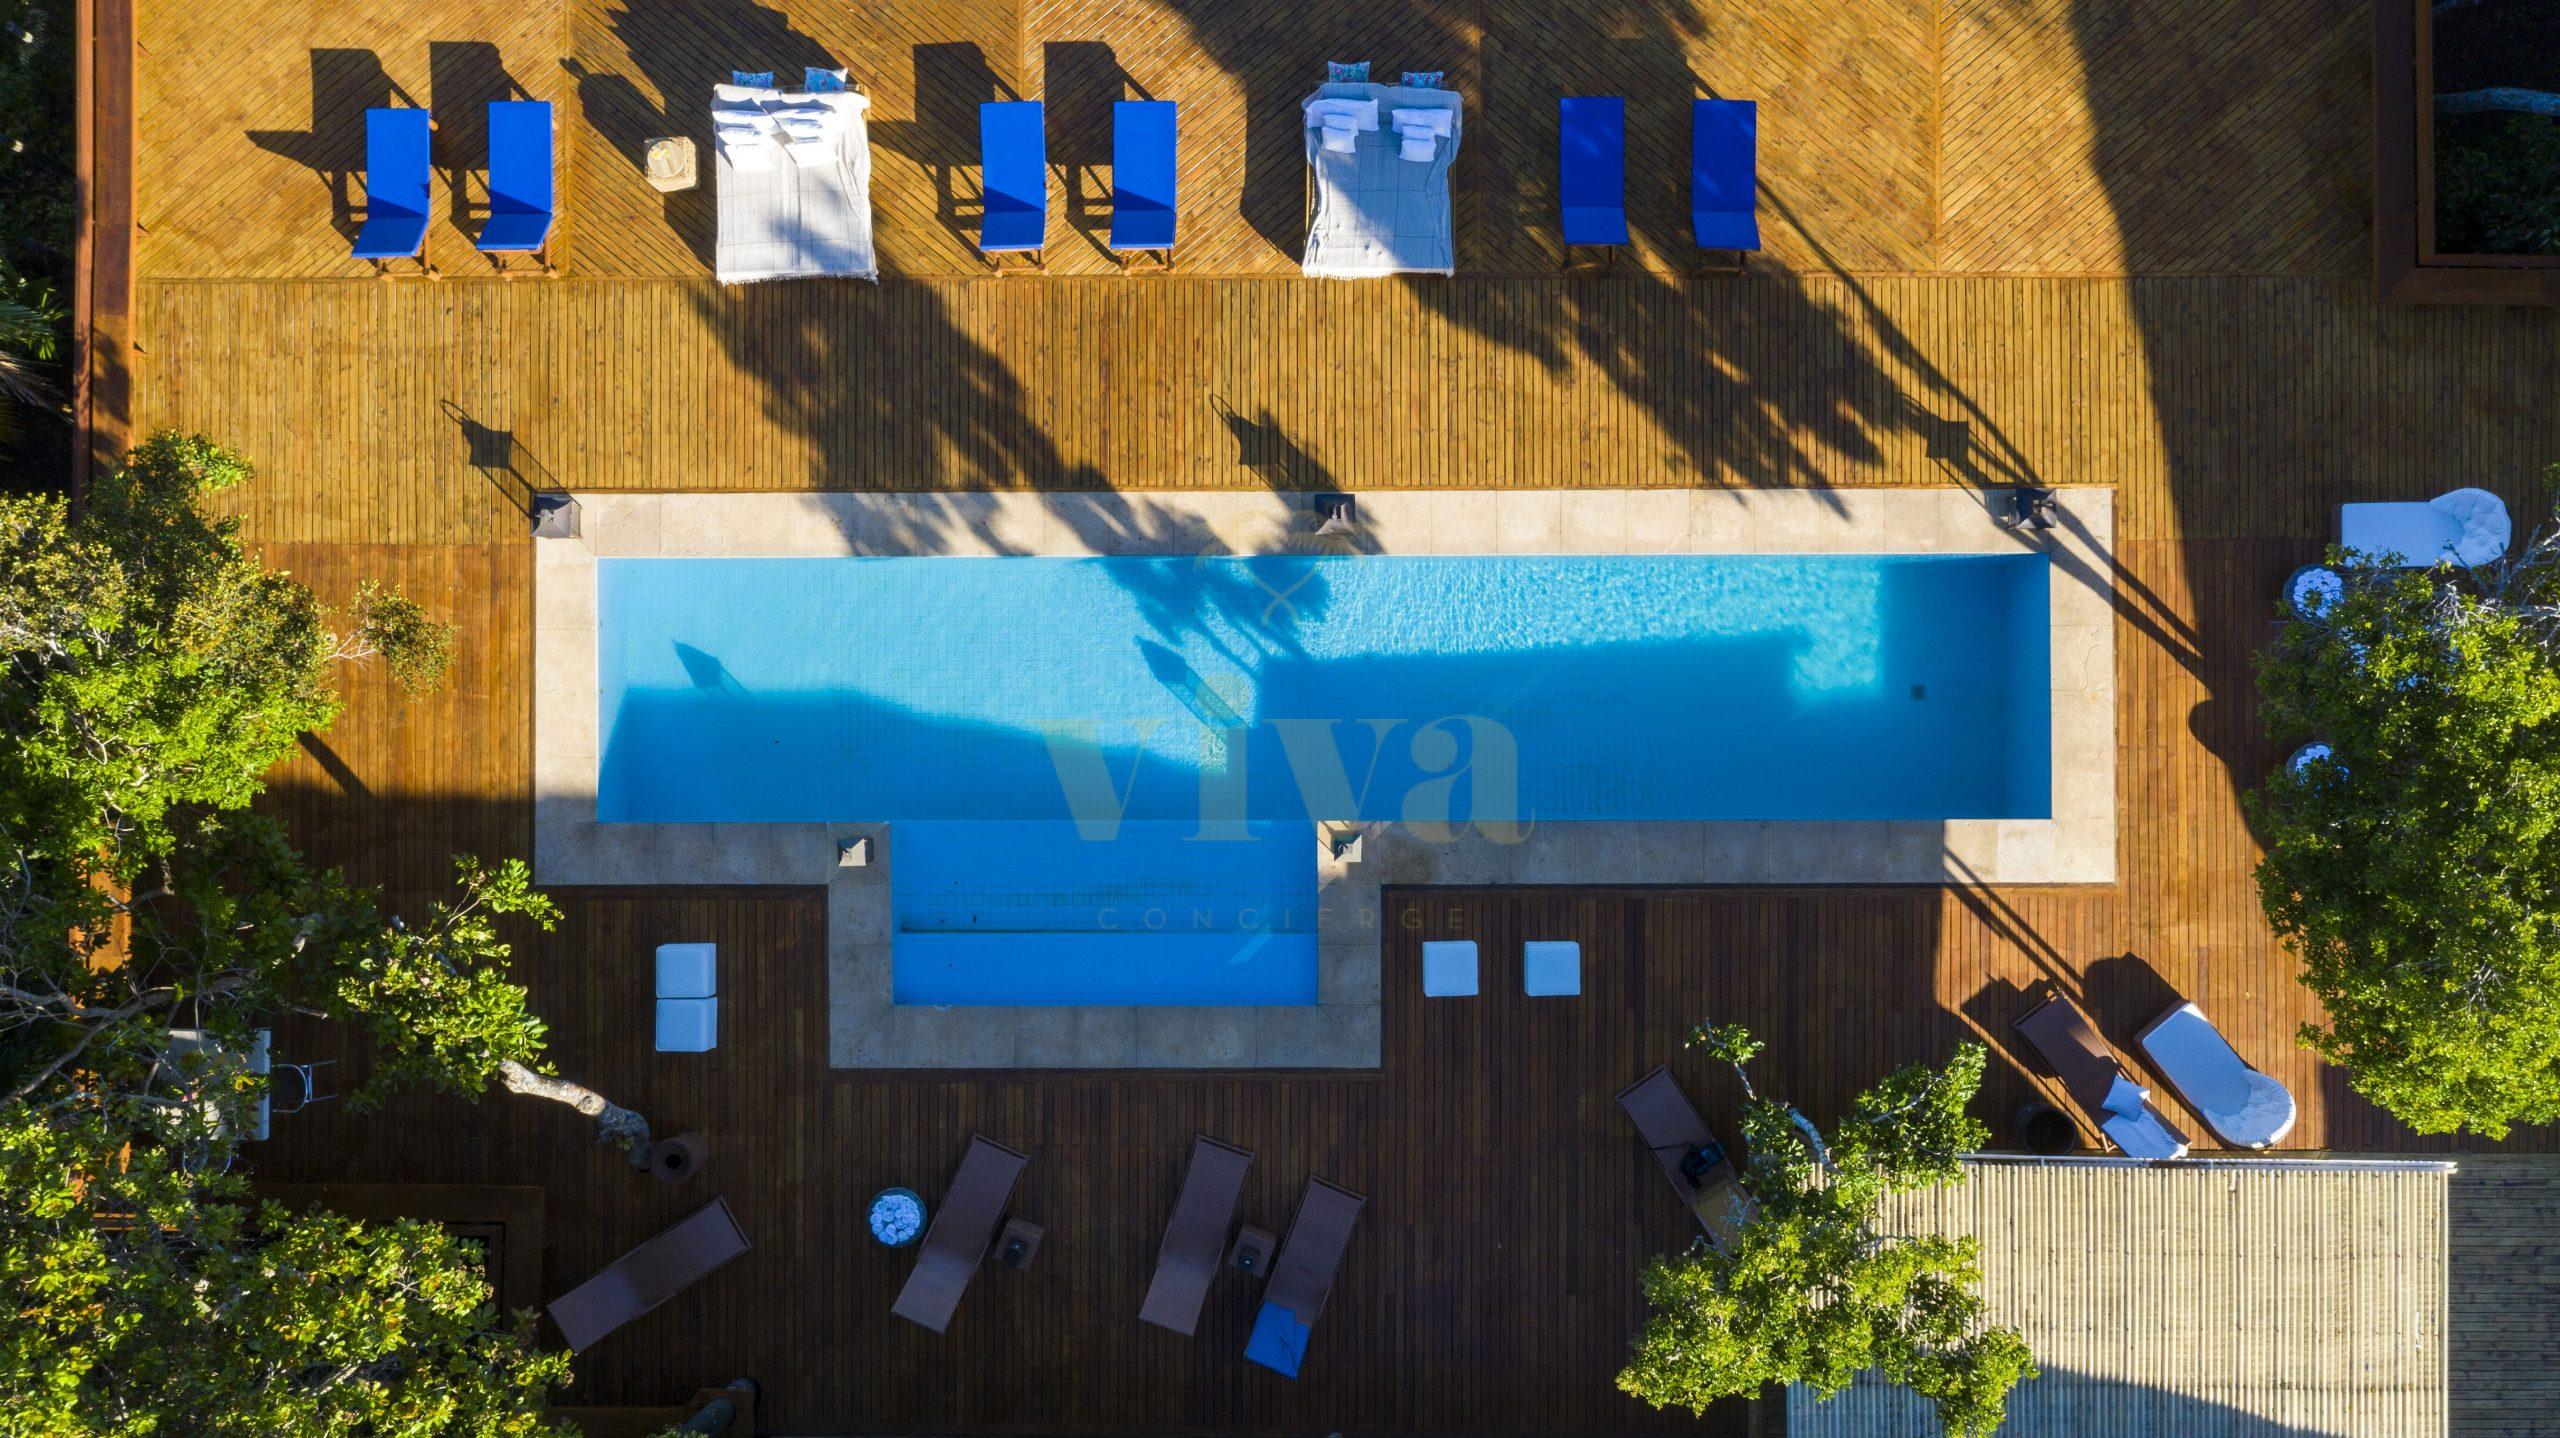 Área social - piscina 7 vista aérea